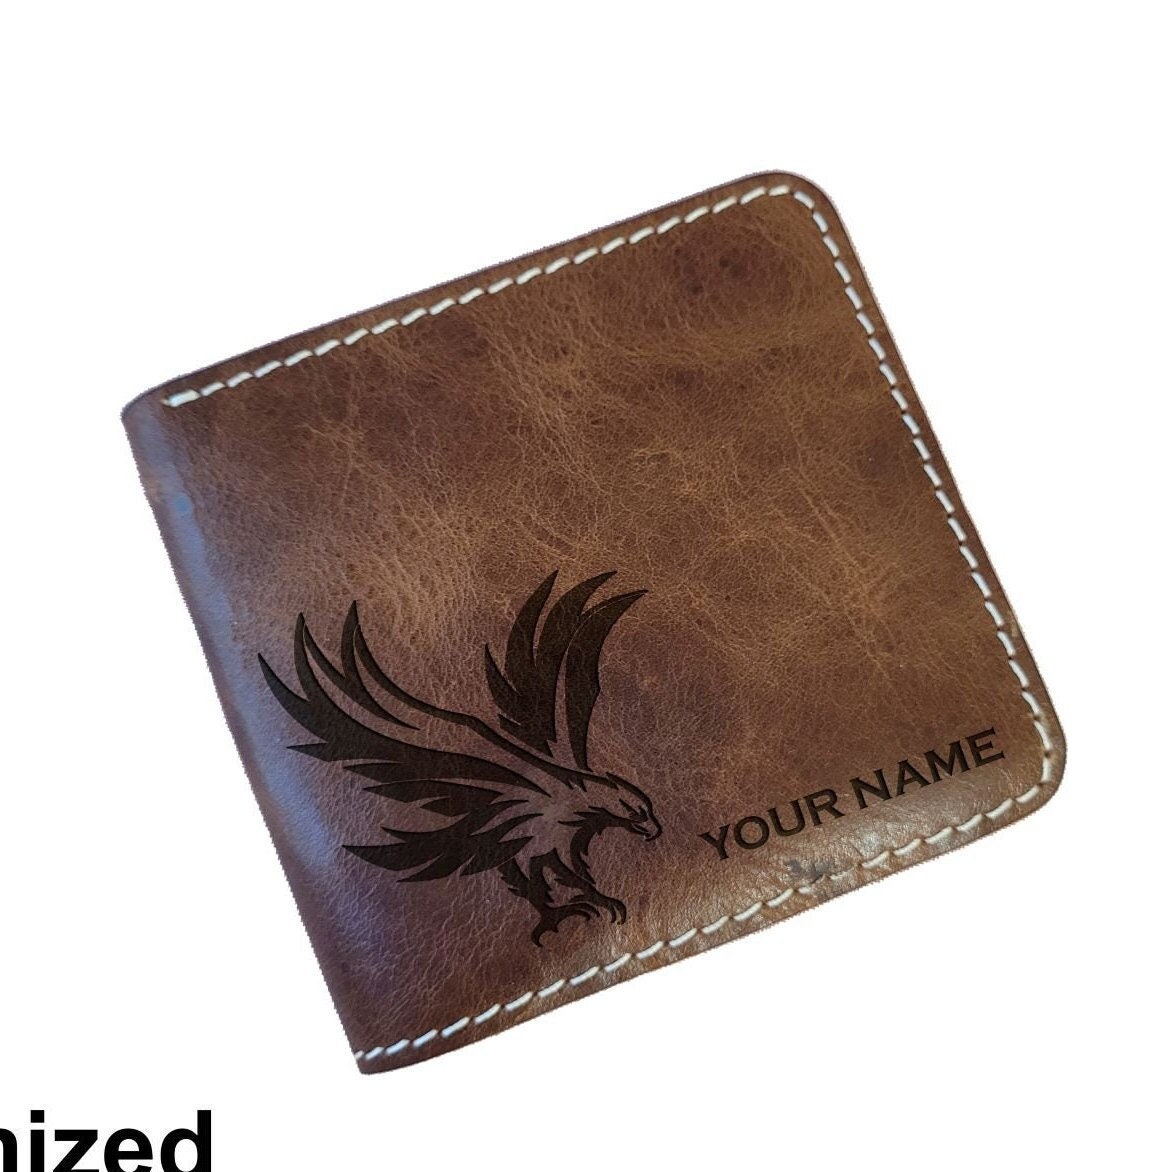 Genuine Leather Bifold Wallet American Bald Eagle Black ID C